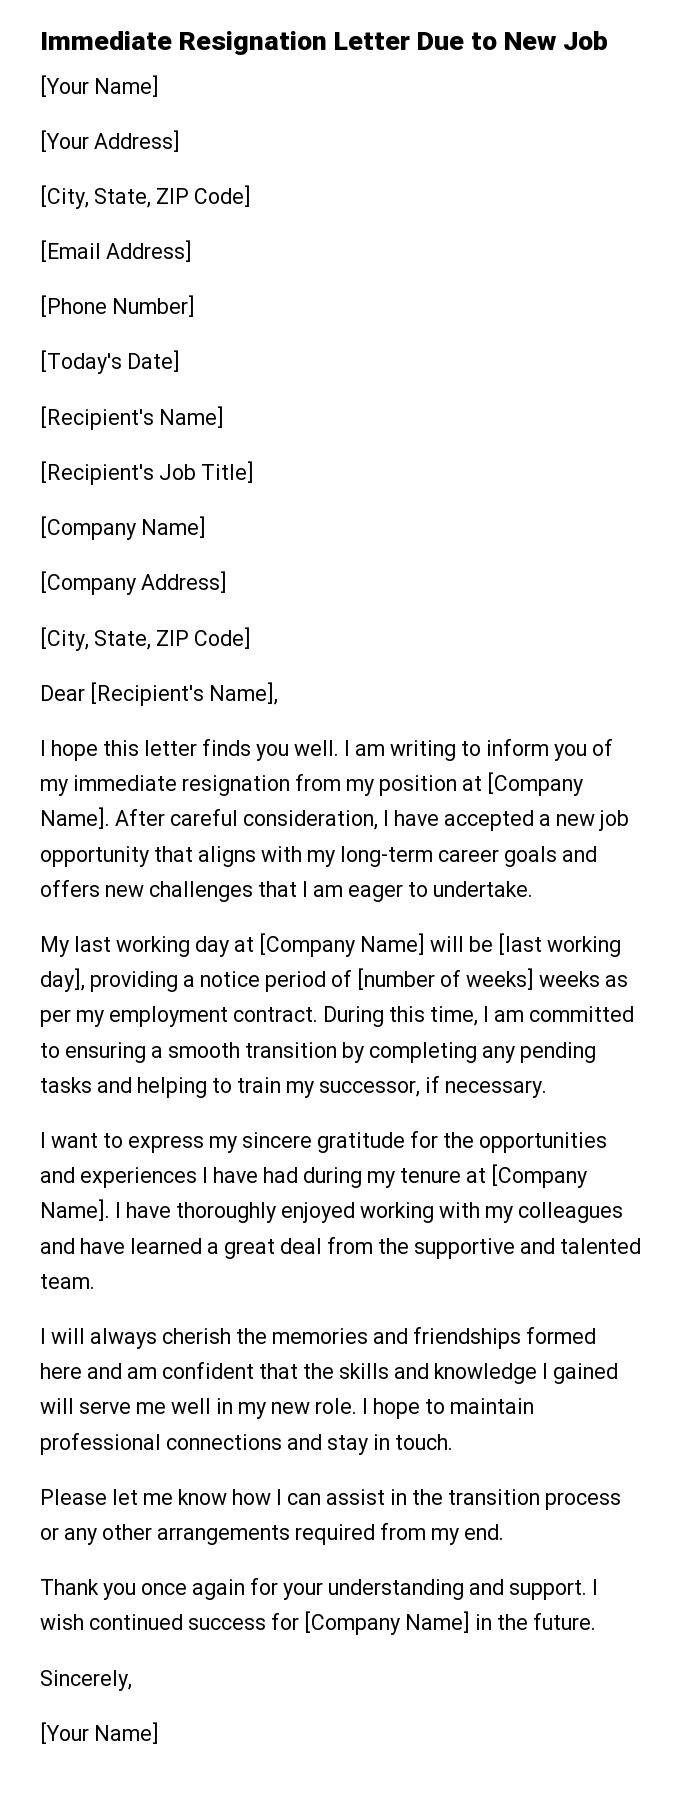 Immediate Resignation Letter Due to New Job